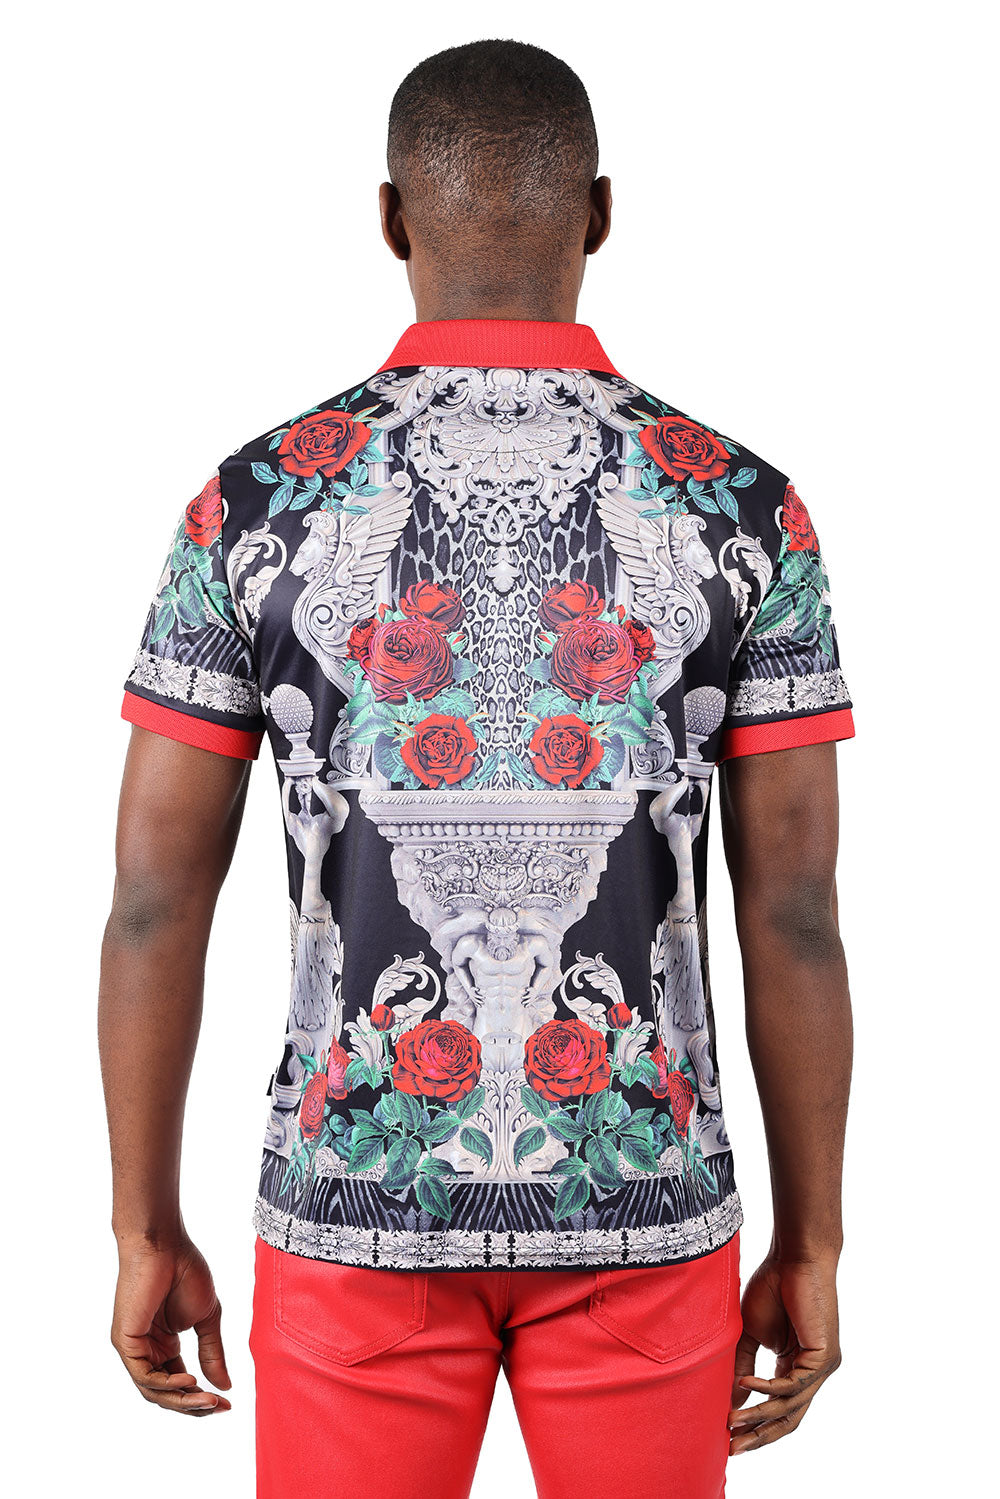 Barabas men's Floral Rose Leopard Prints Graphic Tee Polo Shirts 3PSP18 Black Silver